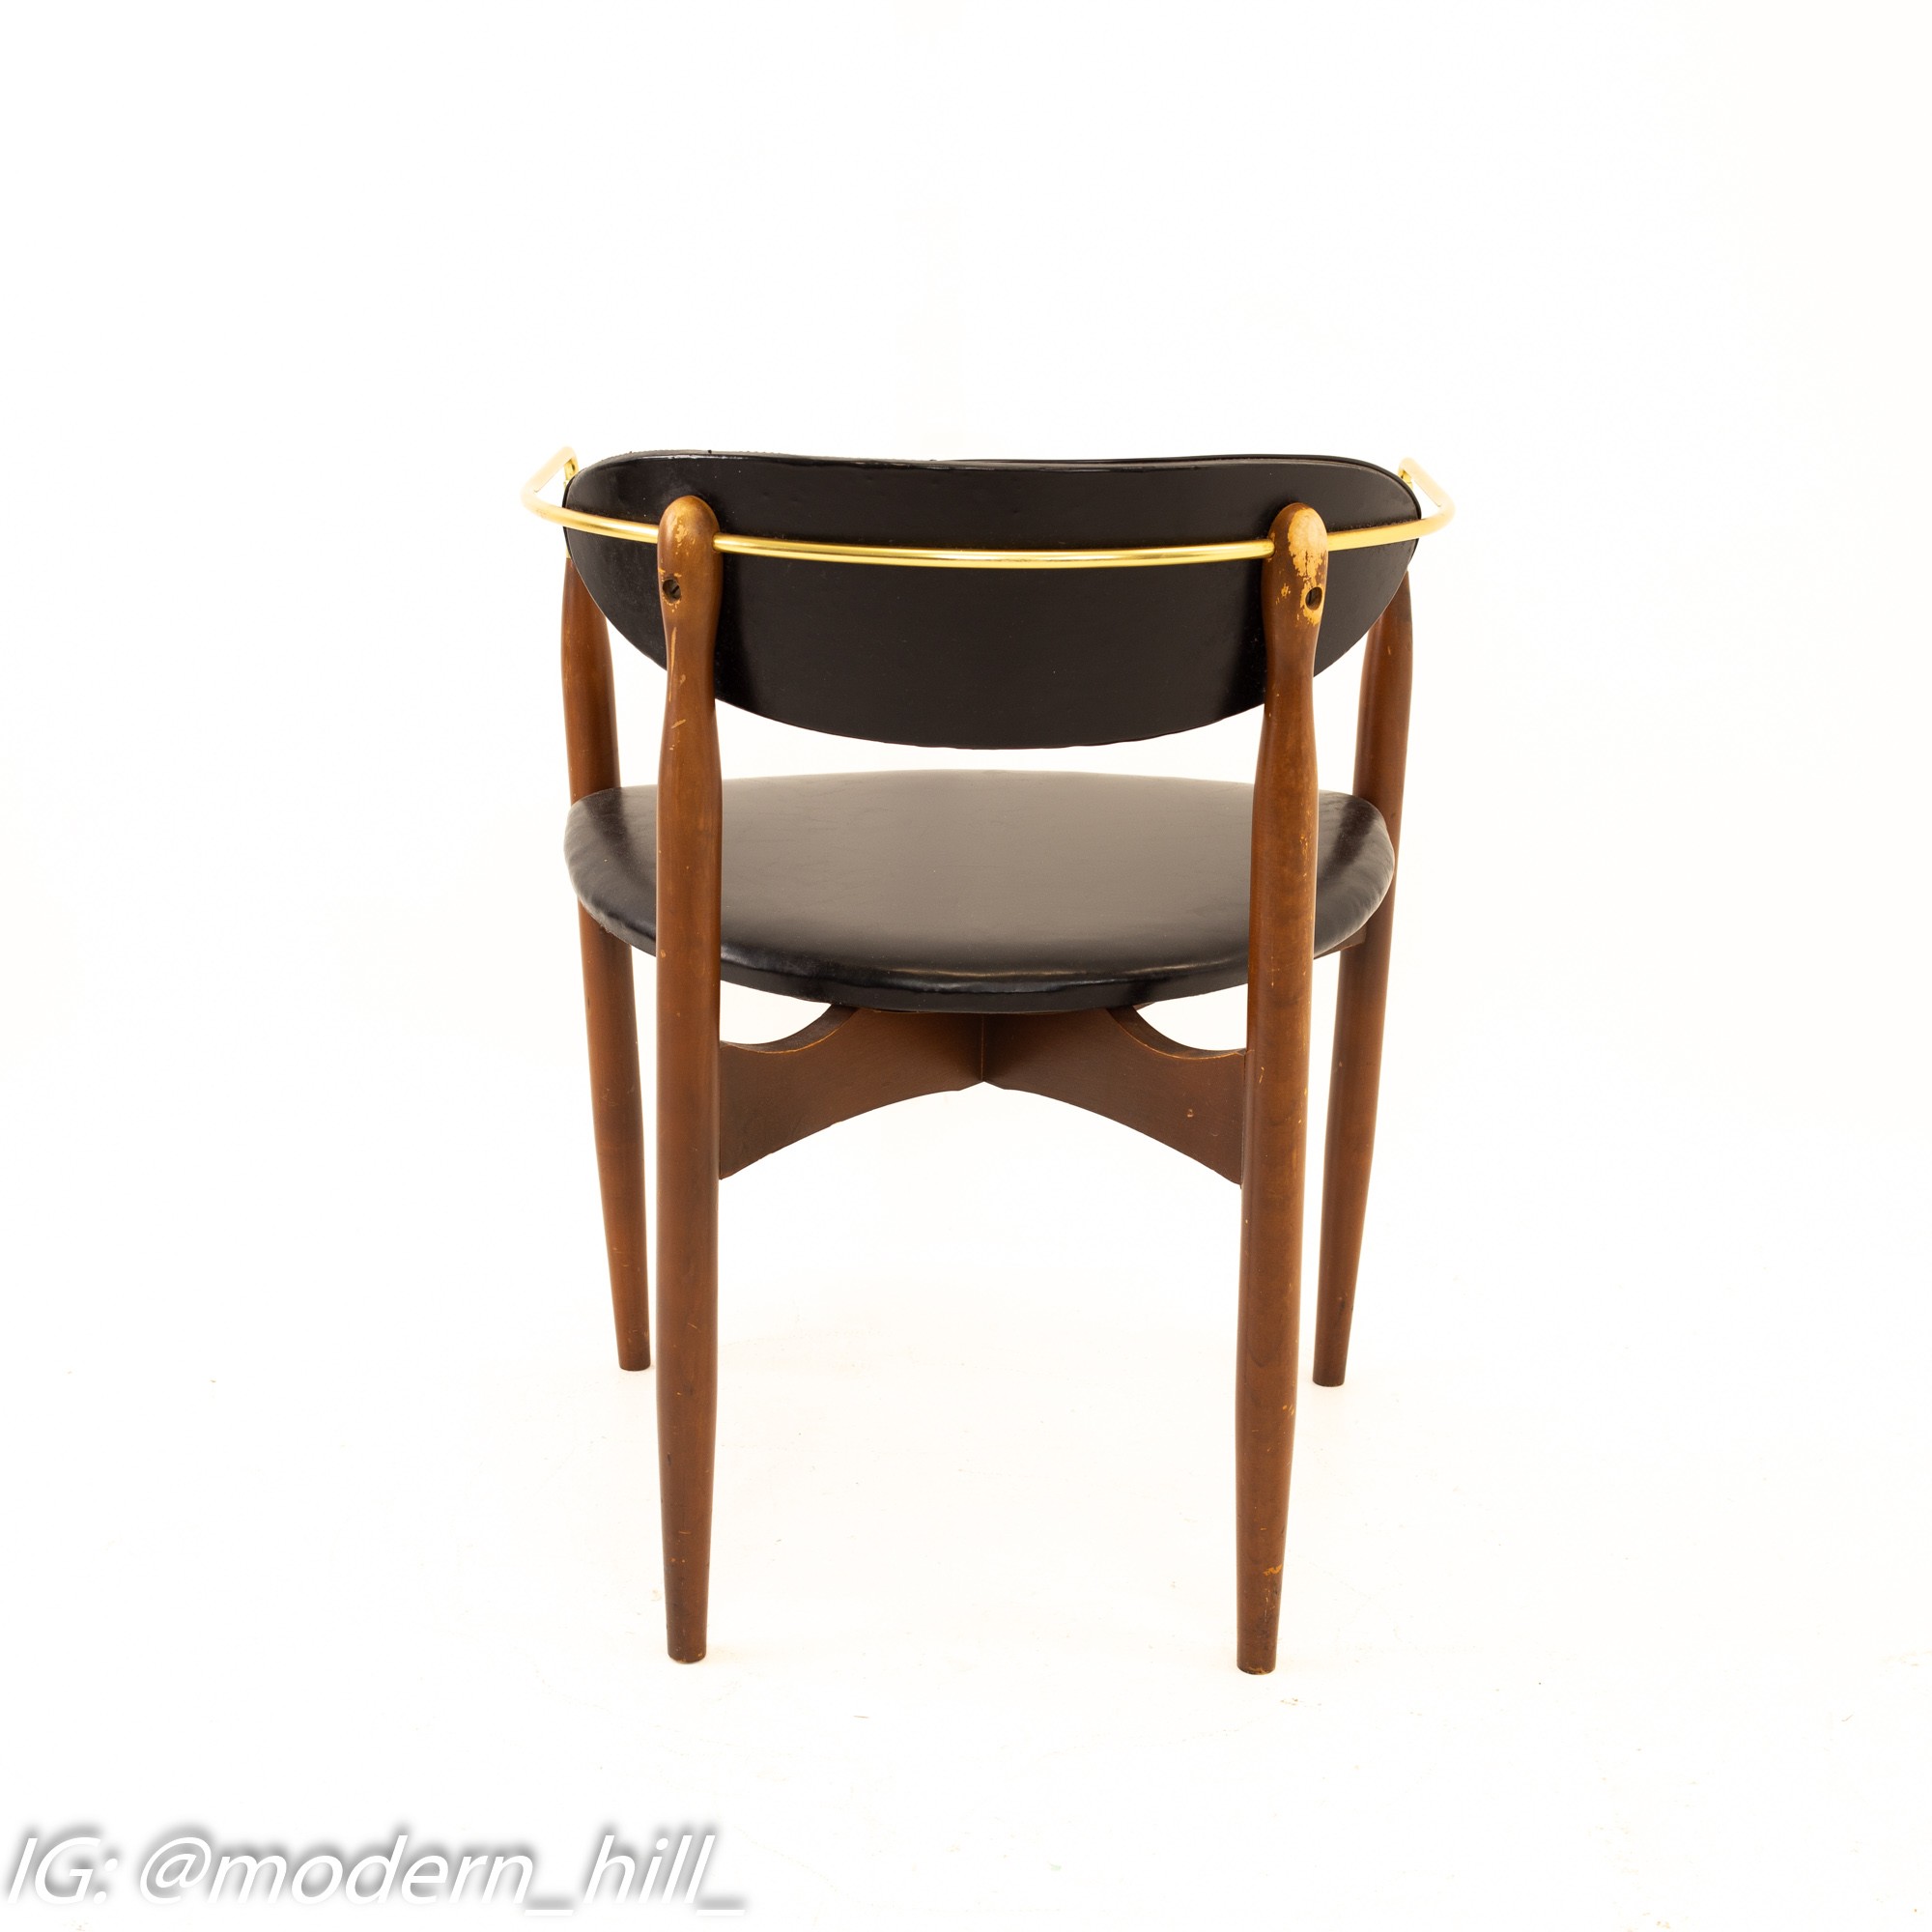 Dan Johnson Viscount Mid Century Walnut and Brass Dining Chairs - Set of 4